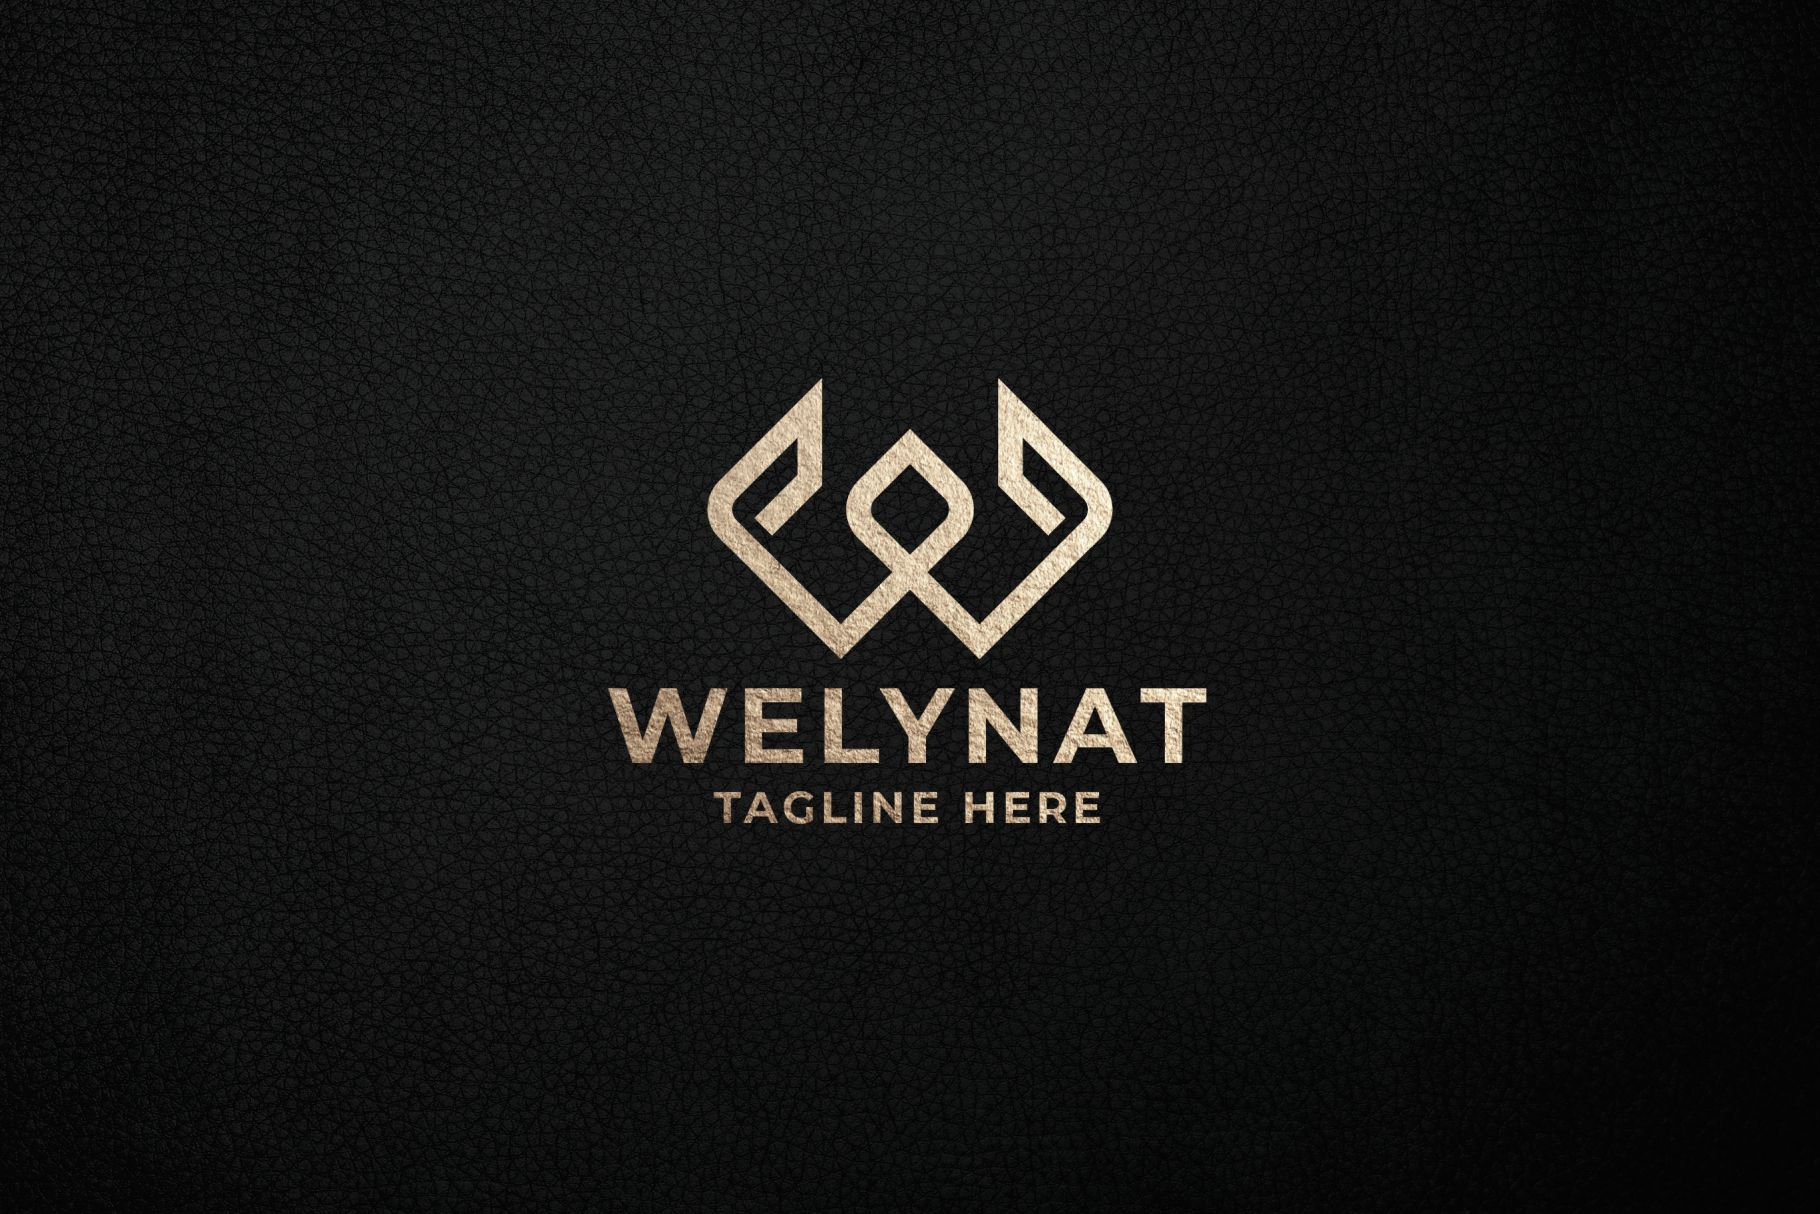 Welynat Letter W Pro Logo Template by Modernikdesign | Codester